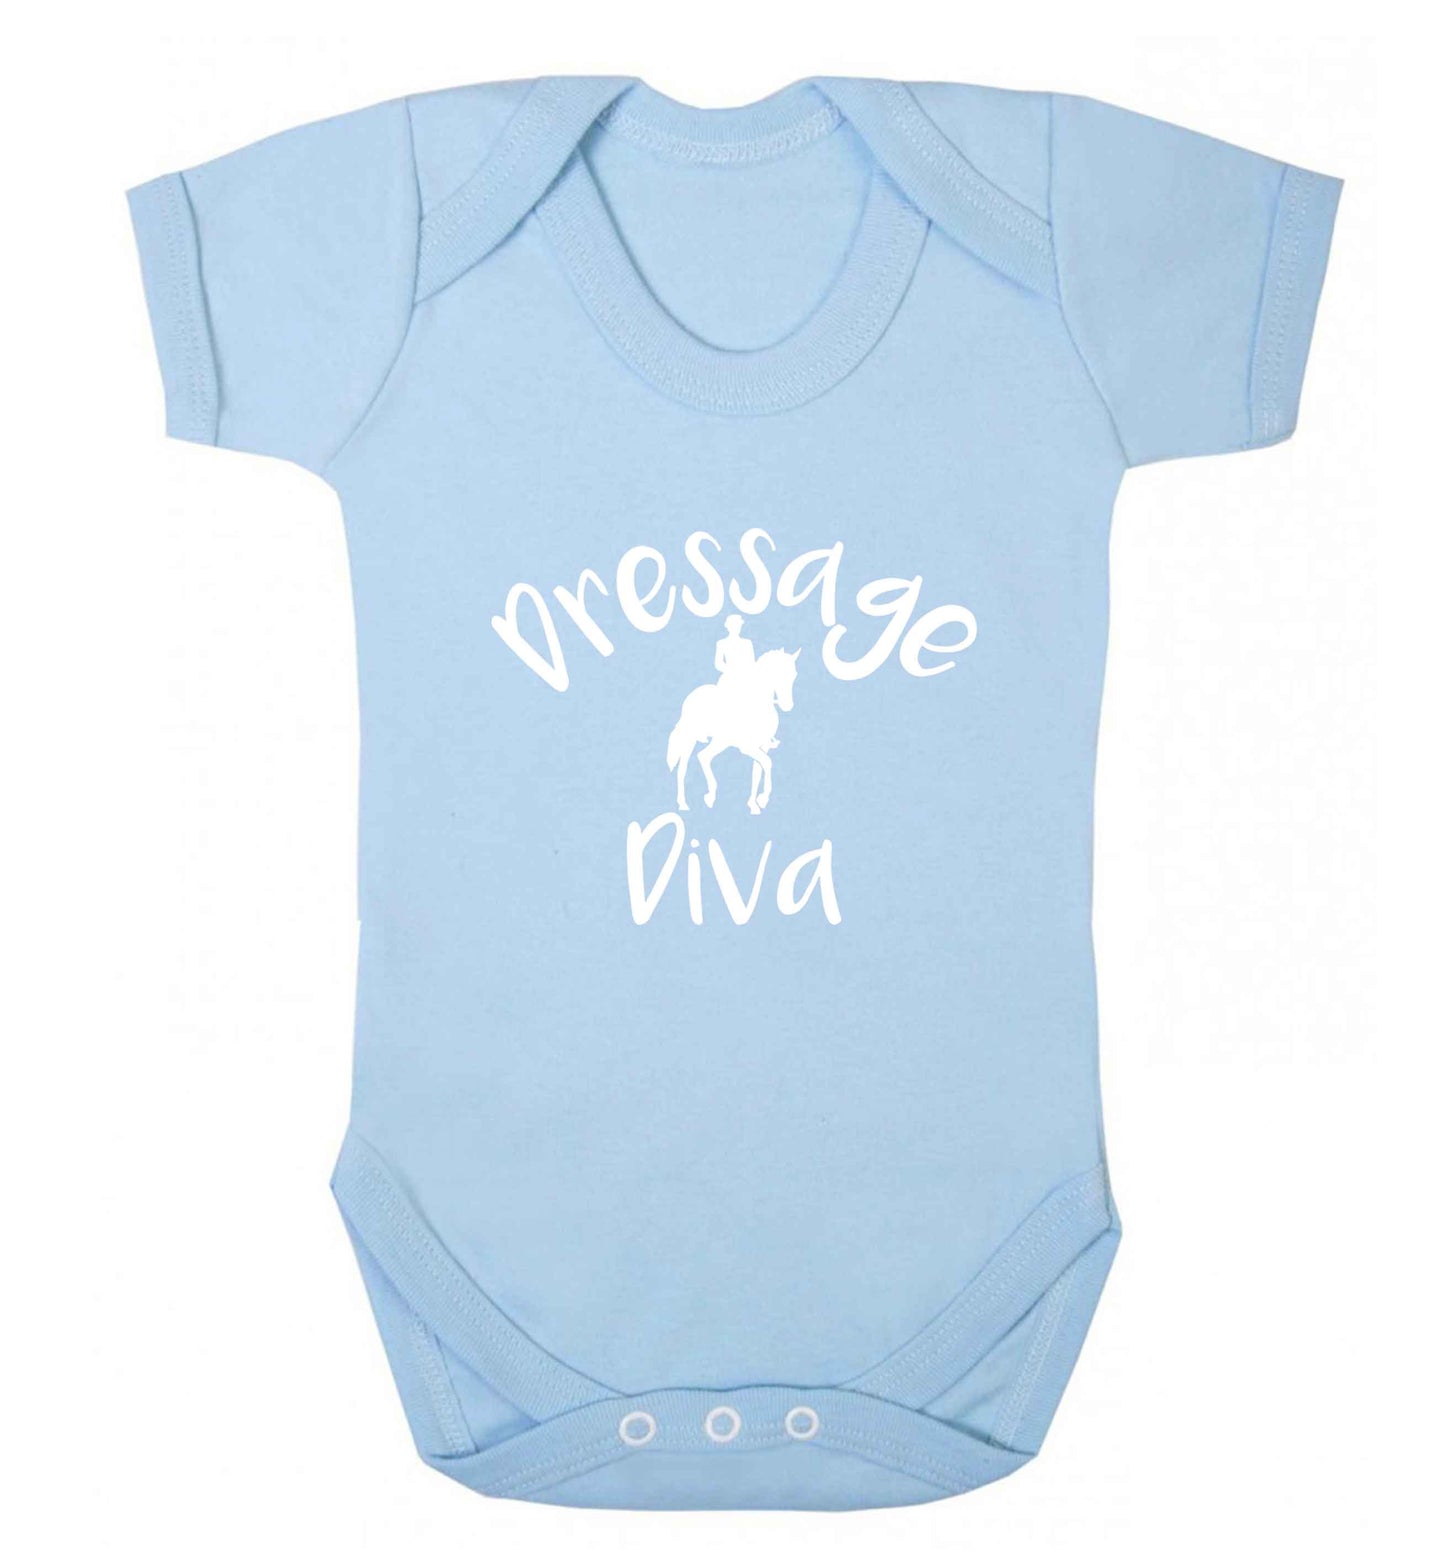 Dressage diva baby vest pale blue 18-24 months